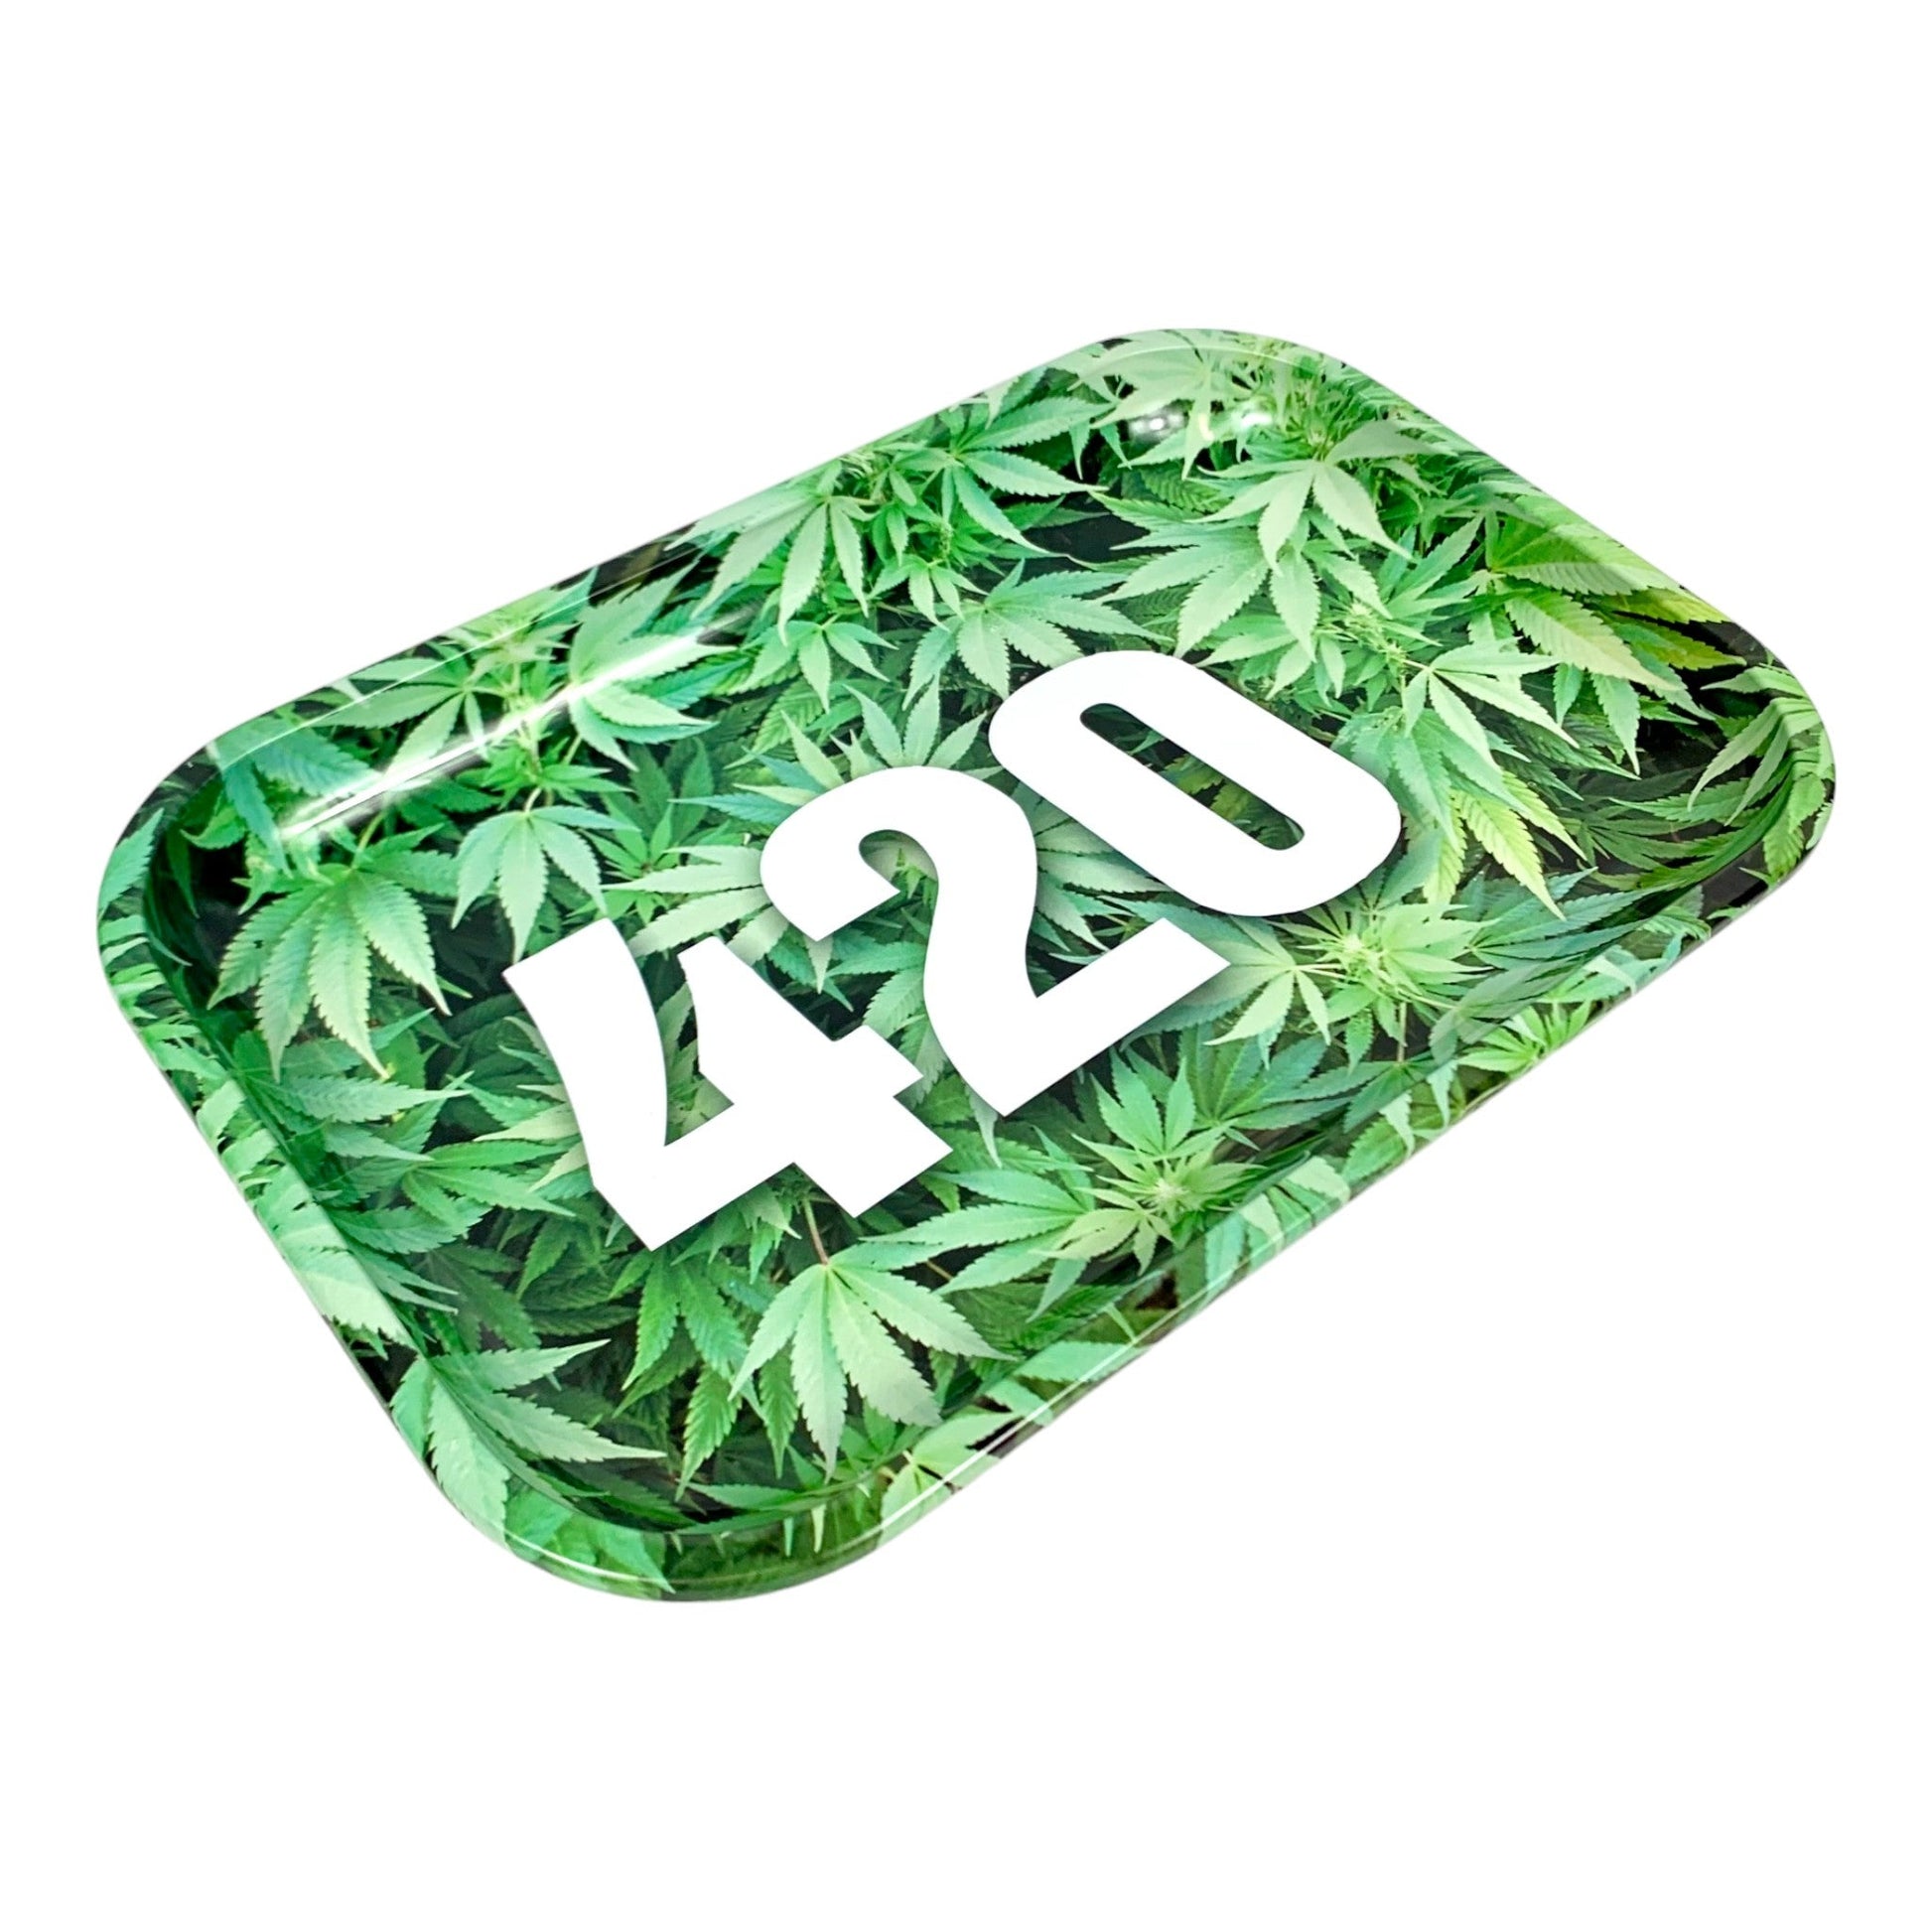 420 Weed Leaf Rolling Tray Medium 28 x 19cm - The Bong Baron